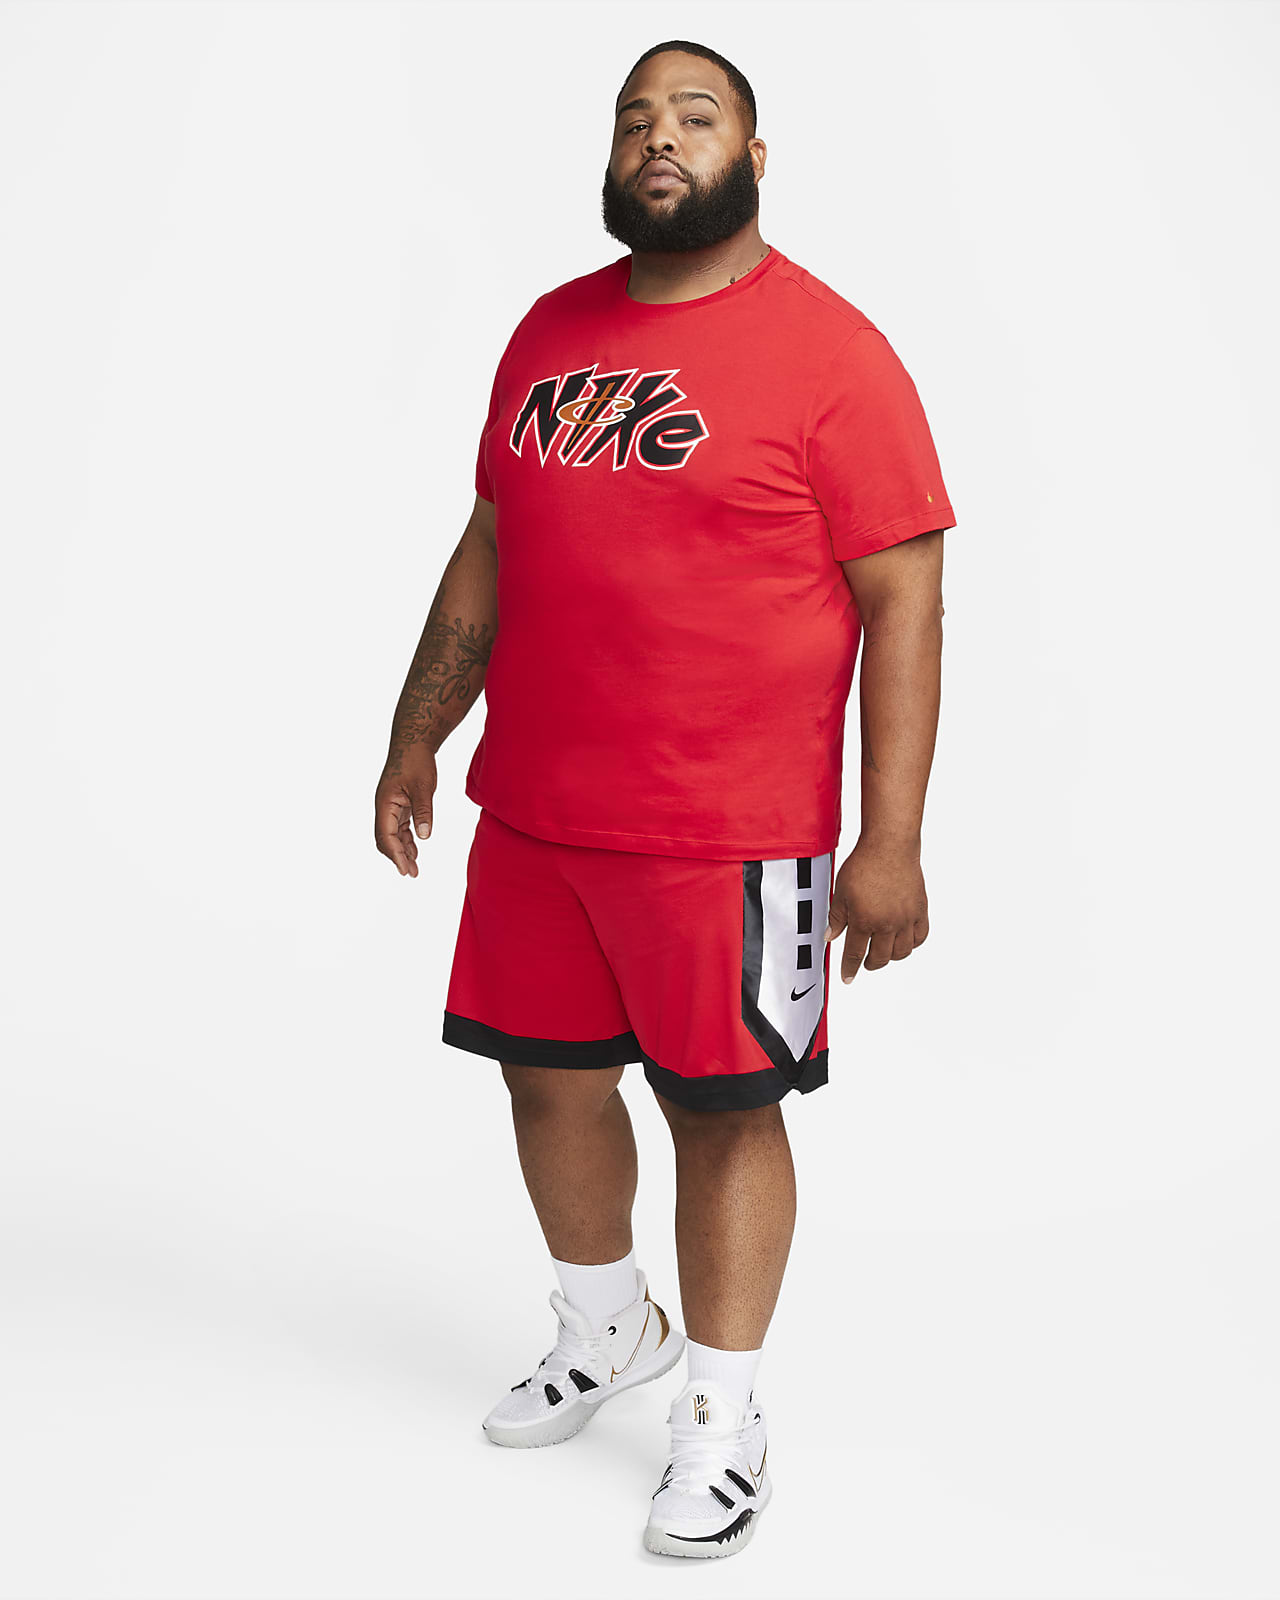 Nike Elite Men's 9 Basketball Shorts